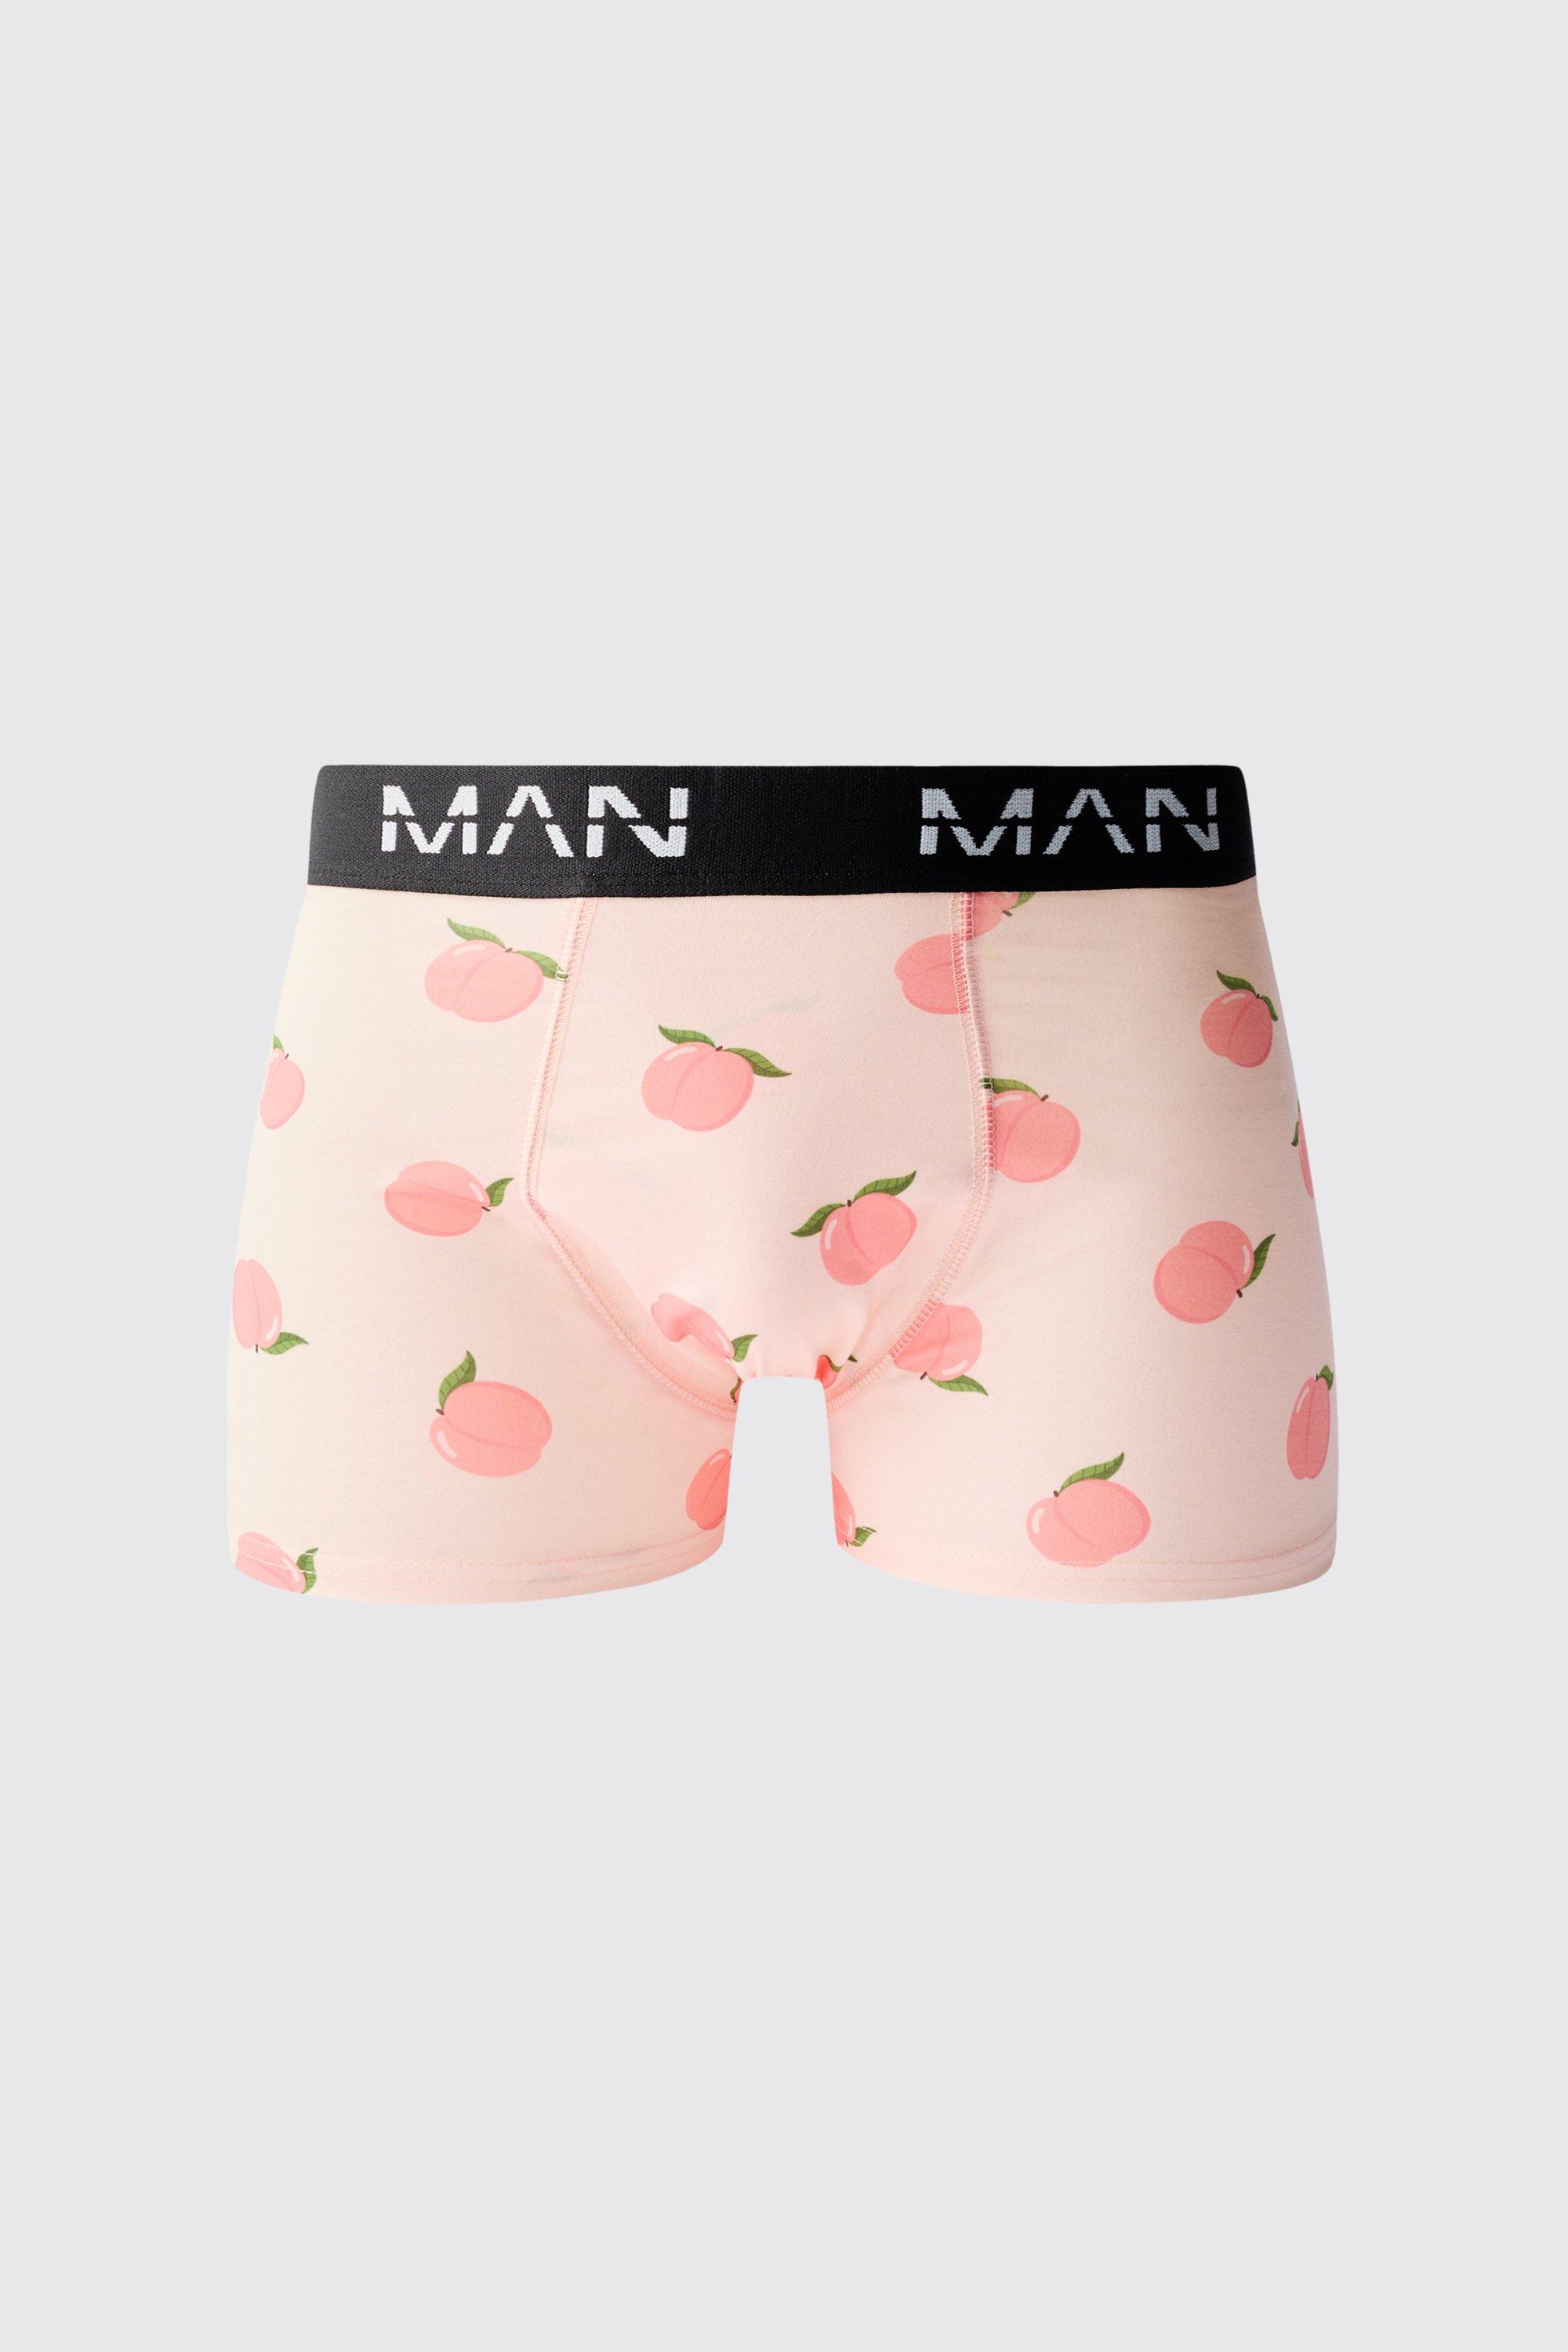 men's man peach printed boxers - multi - s, multi